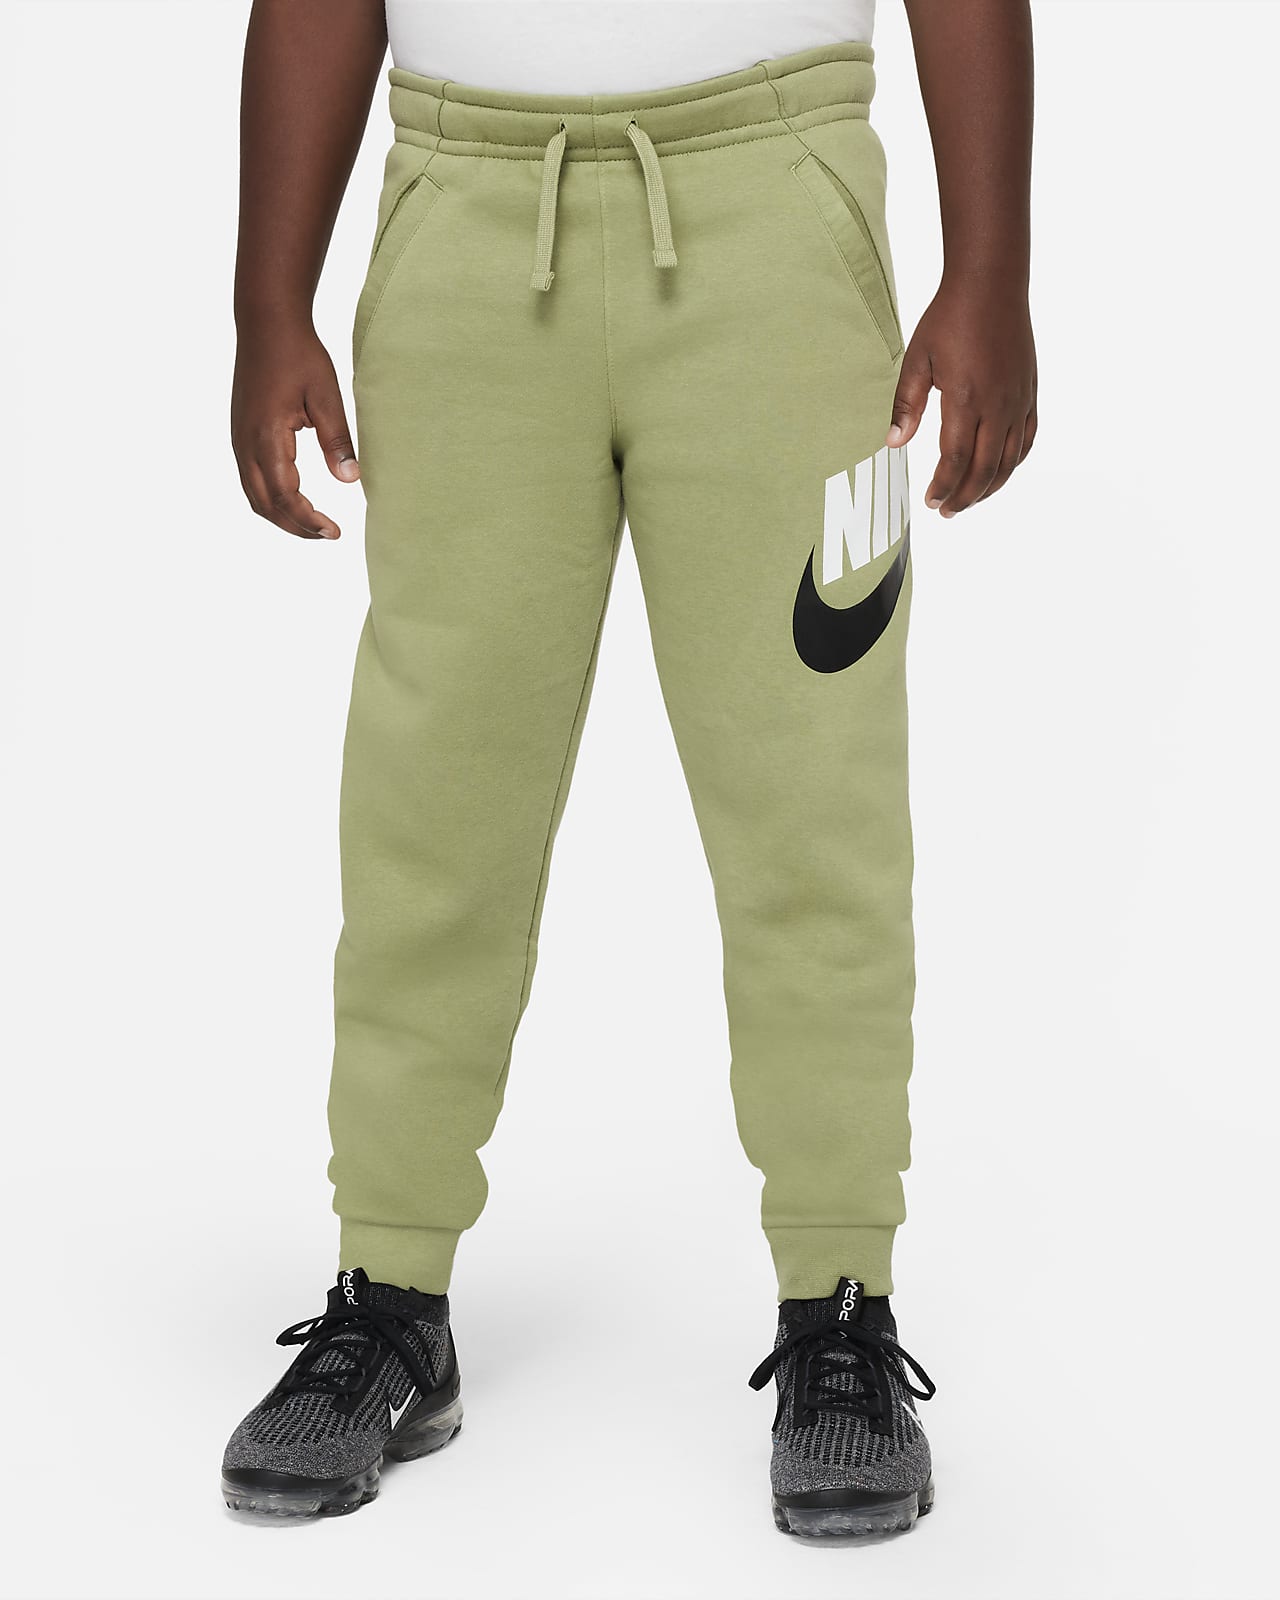 Gray Capri Joggers Mens M drawstring neon Zip Pockets Activewear Trendy 